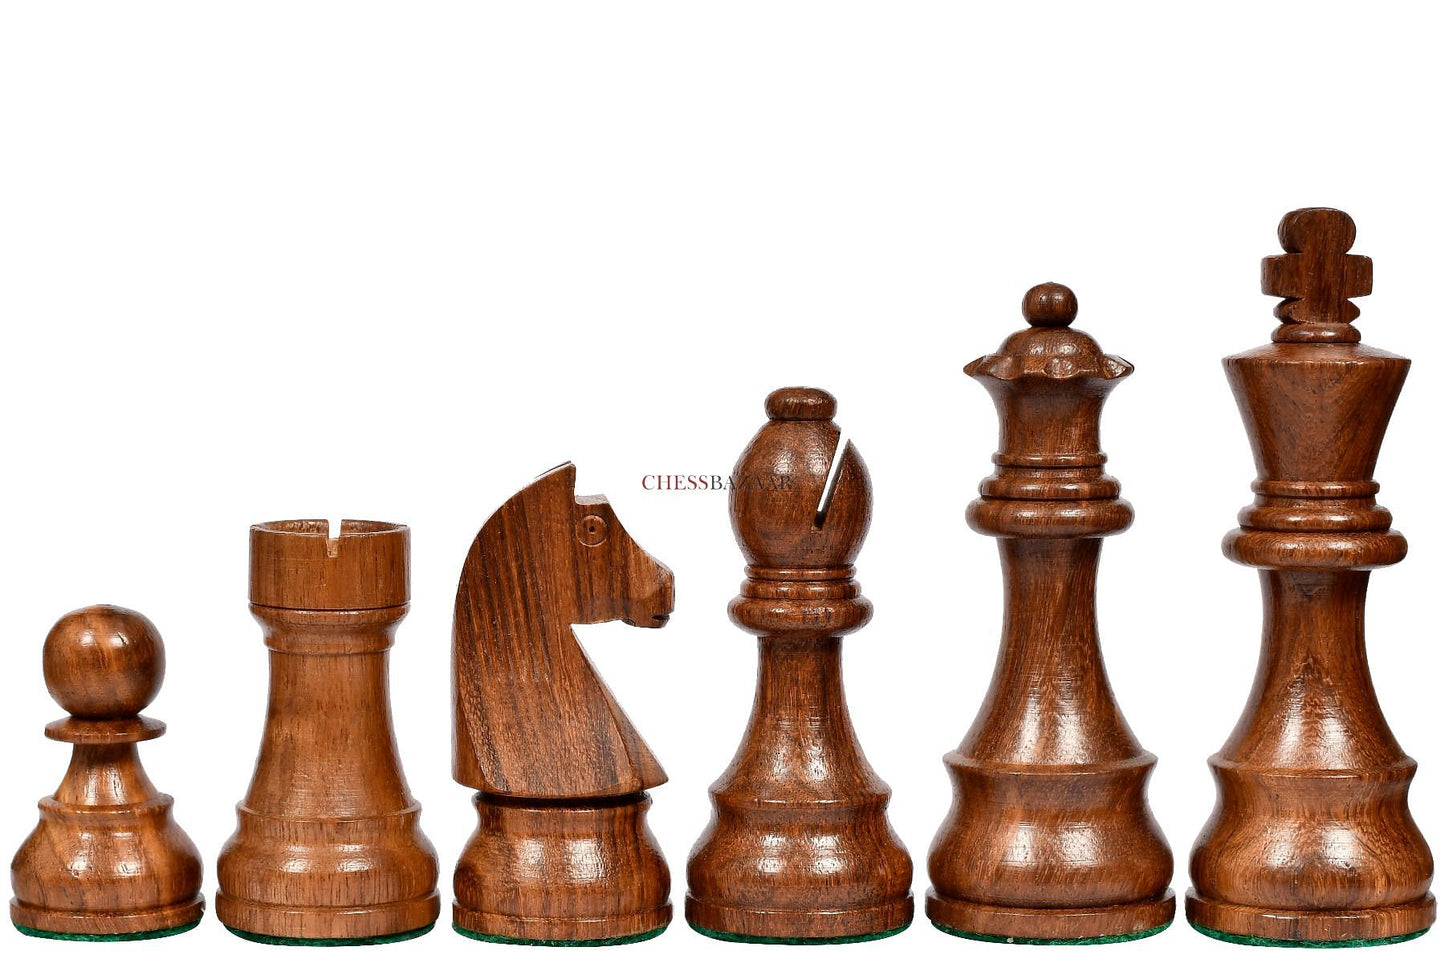 Tournament Series Staunton Chess Pieces with German Knight in Sheesham & Boxwood - 3.75" King